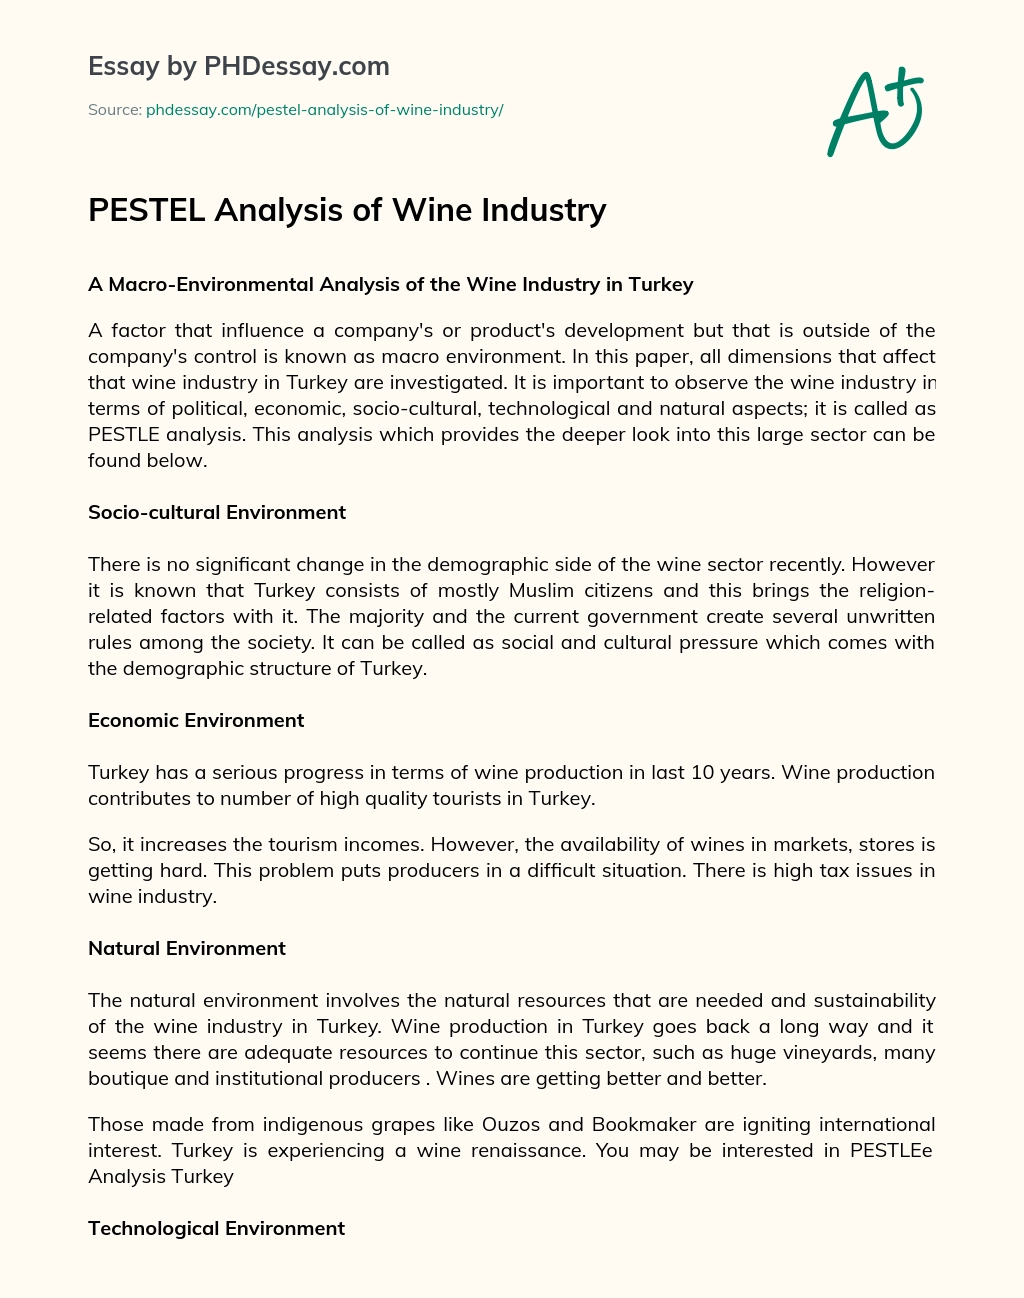 PESTEL Analysis of Wine Industry in Turkey essay